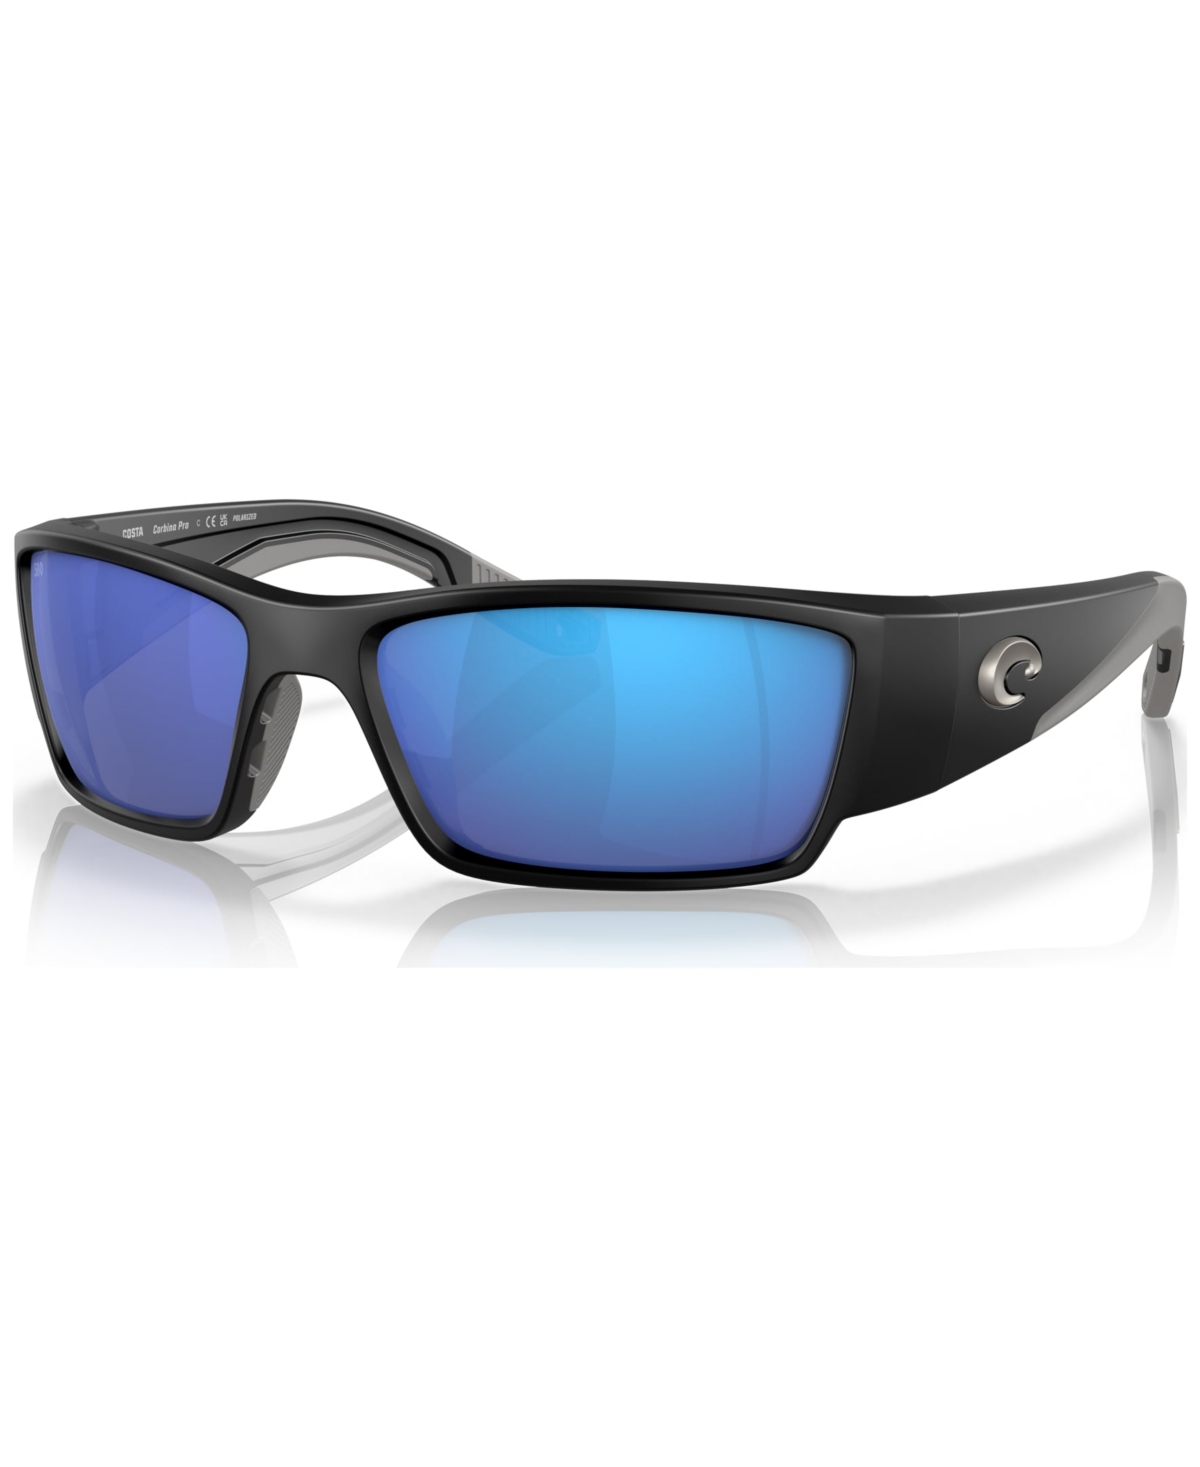 Men's Polarized Sunglasses, Corbina Pro - Matte Black-